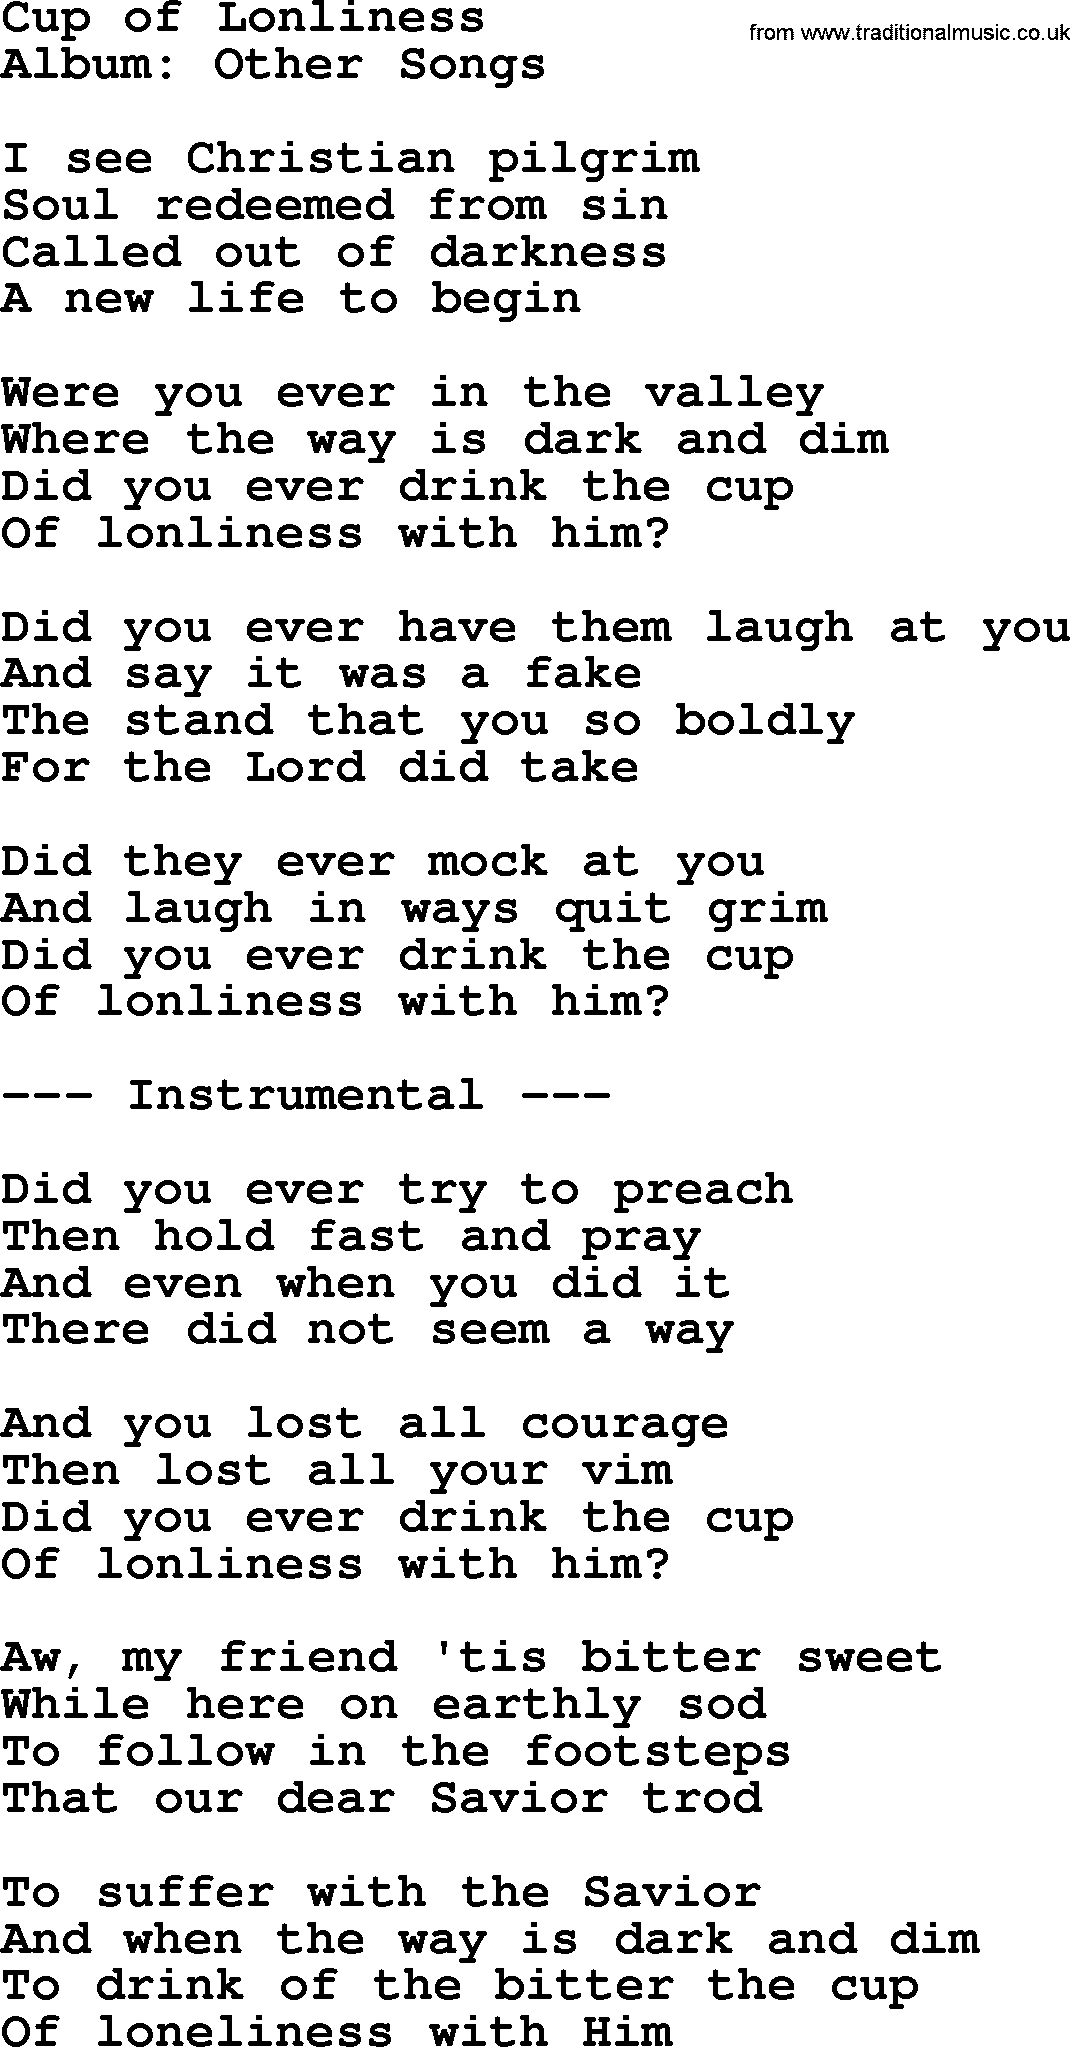 George Jones song: Cup Of Lonliness, lyrics